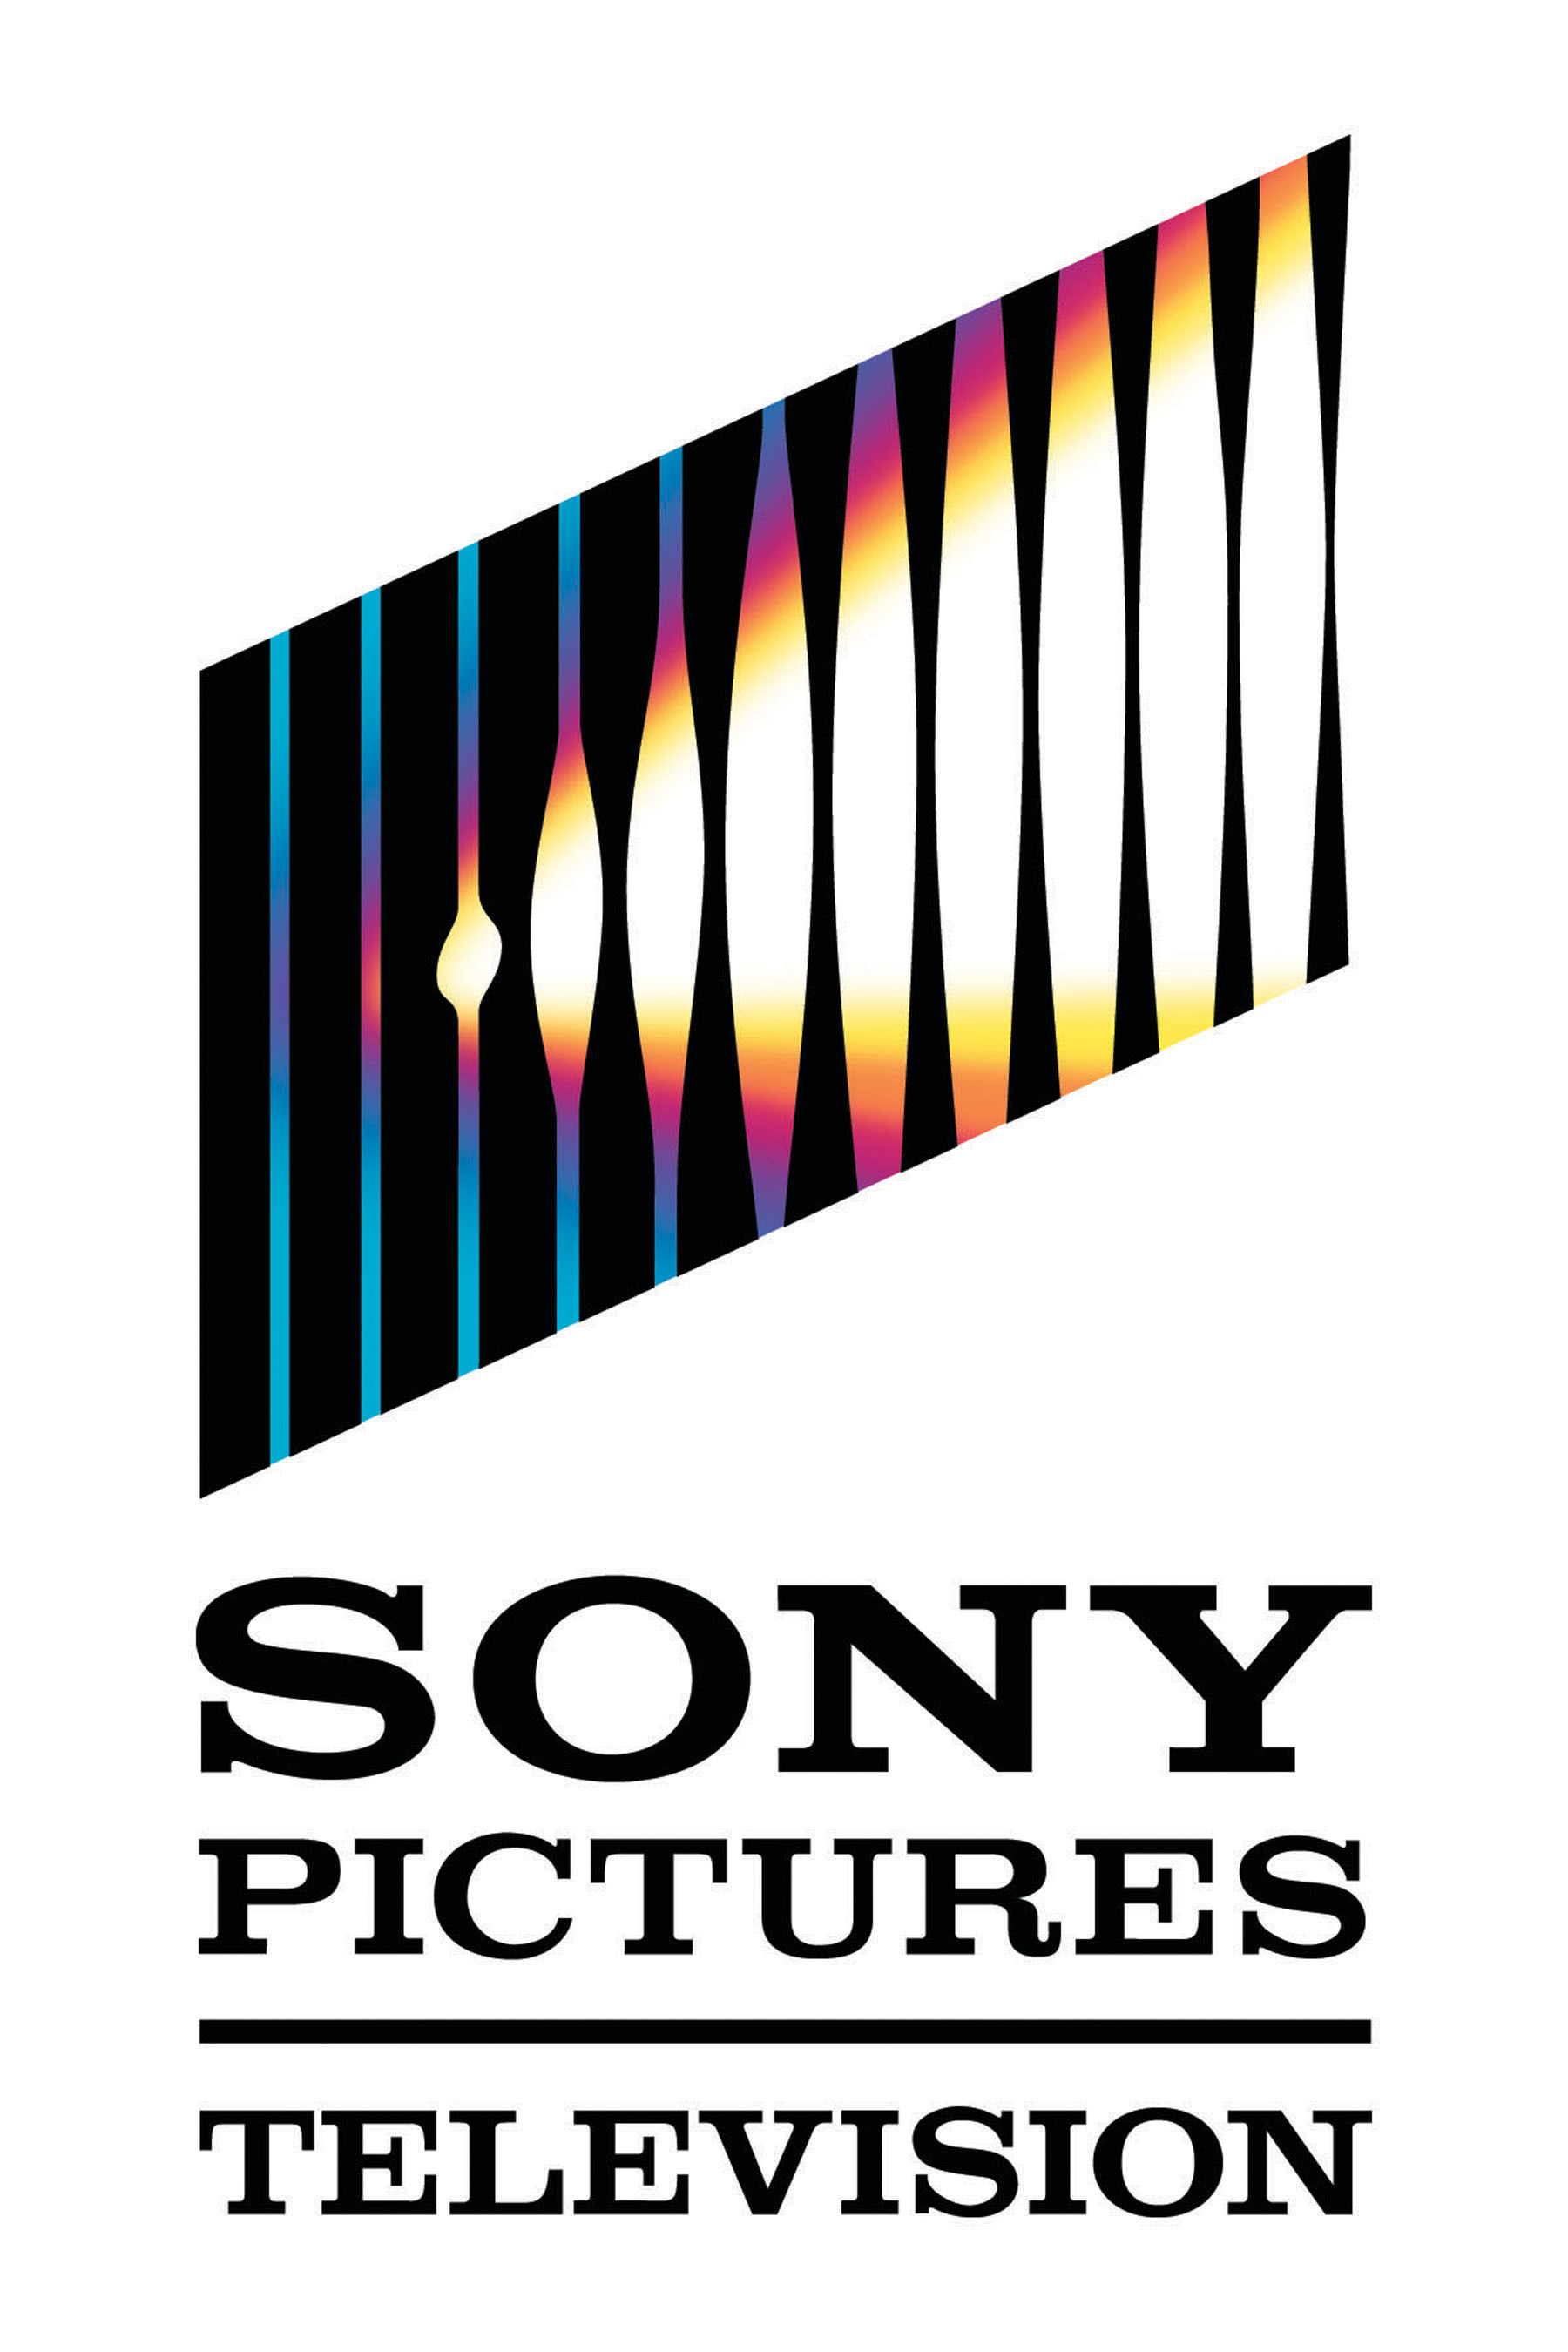 Sony Pictures Television logo. (PRNewsFoto/Sony Pictures Television) (PRNewsFoto/)